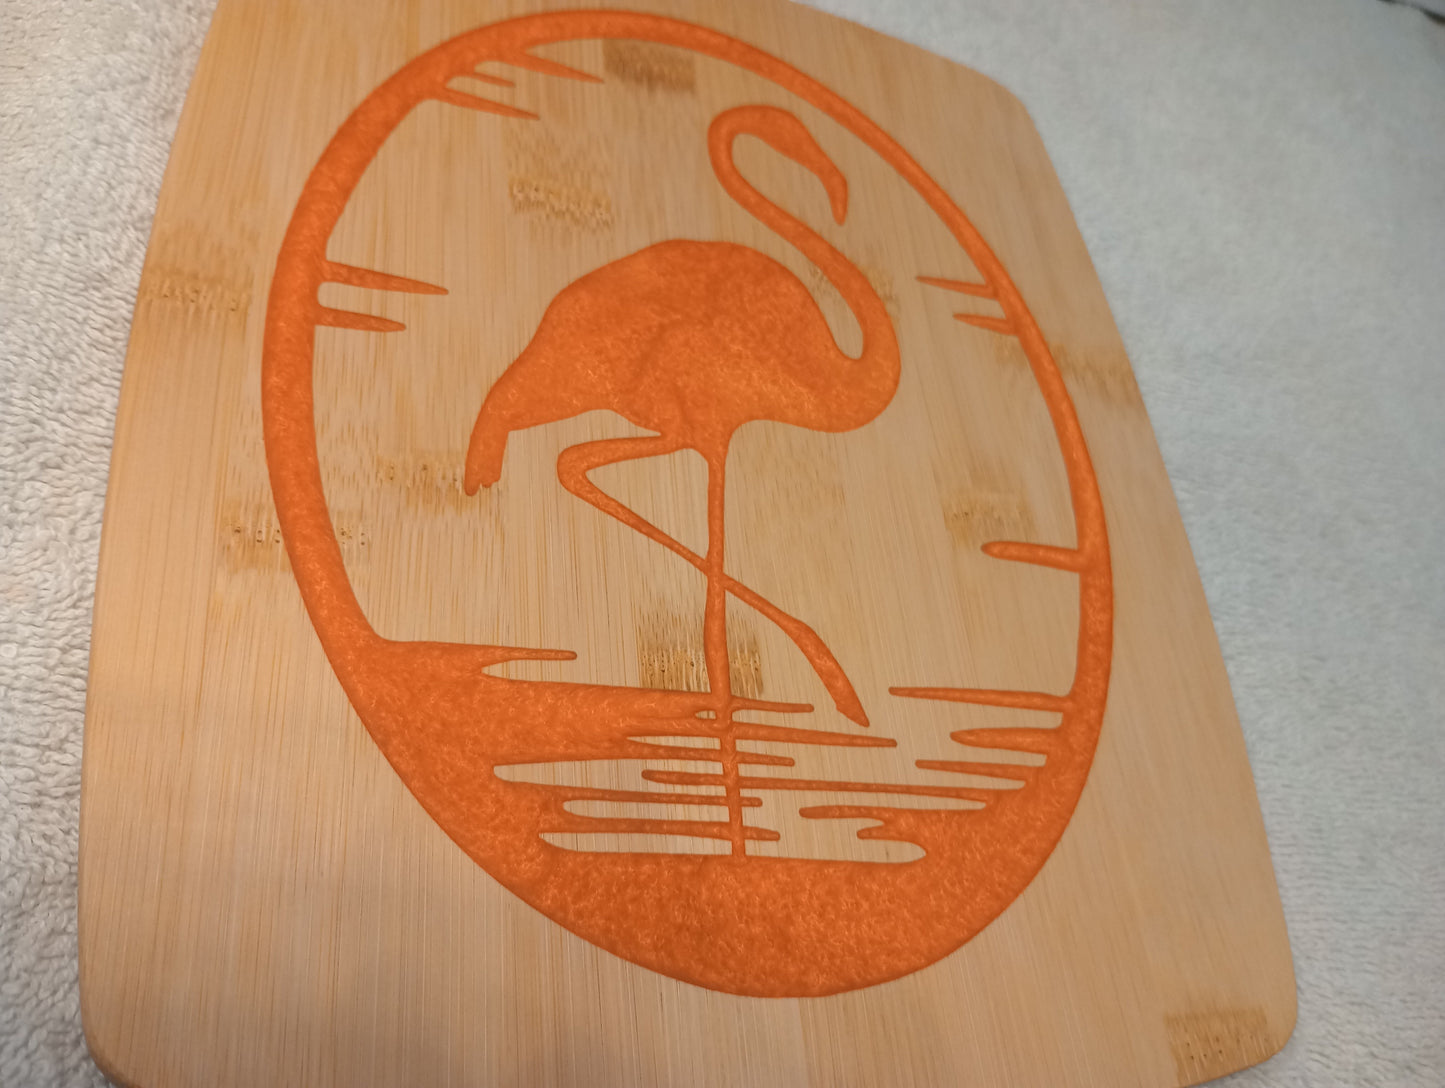 Bamboo cutting board with food grade epoxy inlays - flamingo